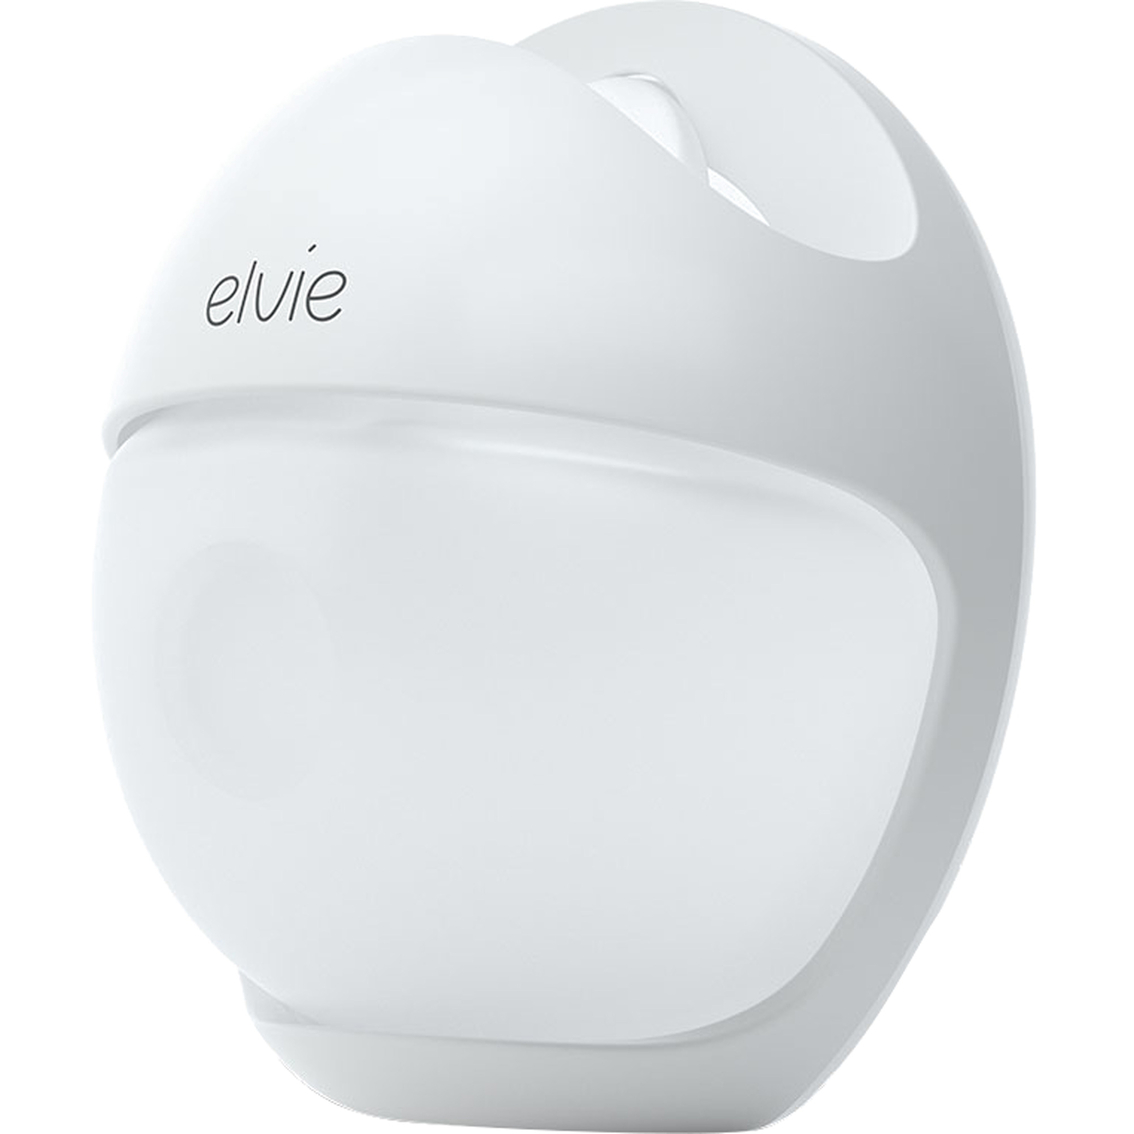 Elvie Curve Manual Breast Pump - Image 4 of 8